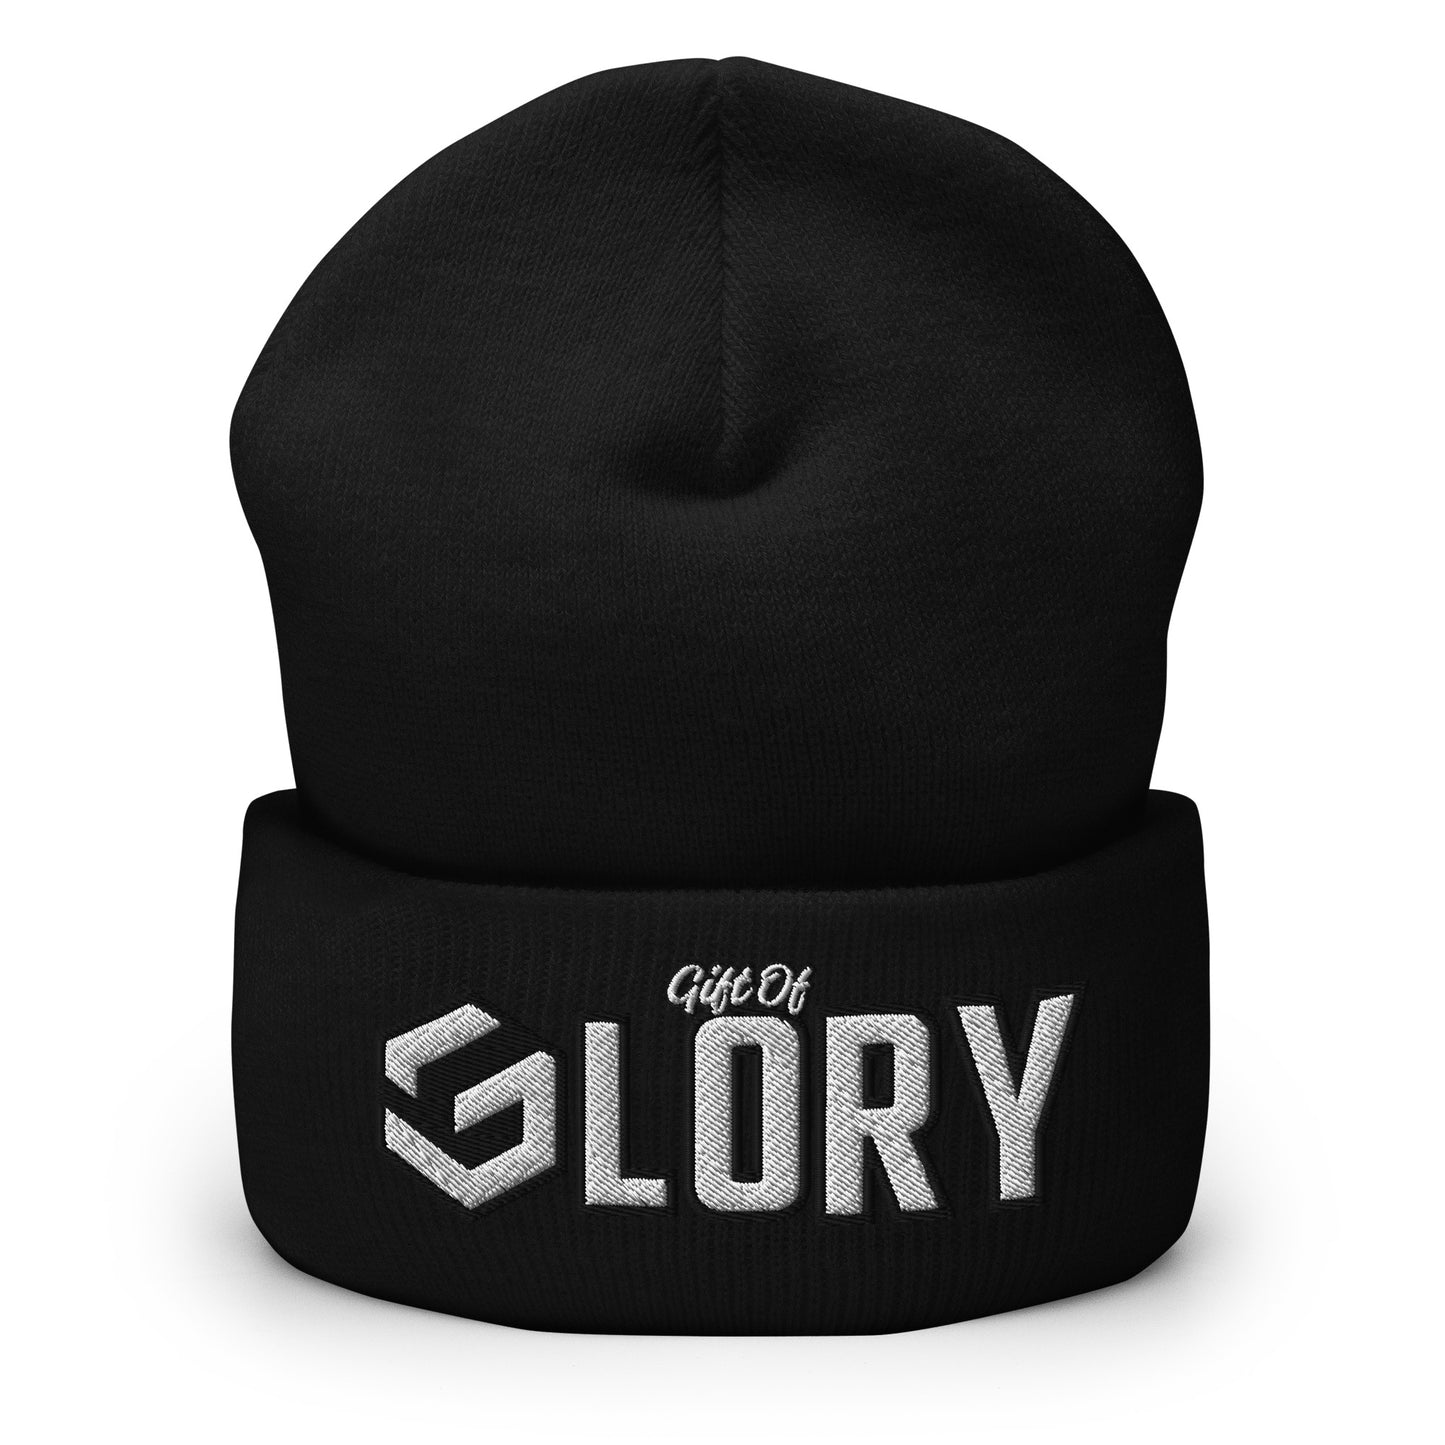 GLORY'S White/Black Beanie - Gift of Glory